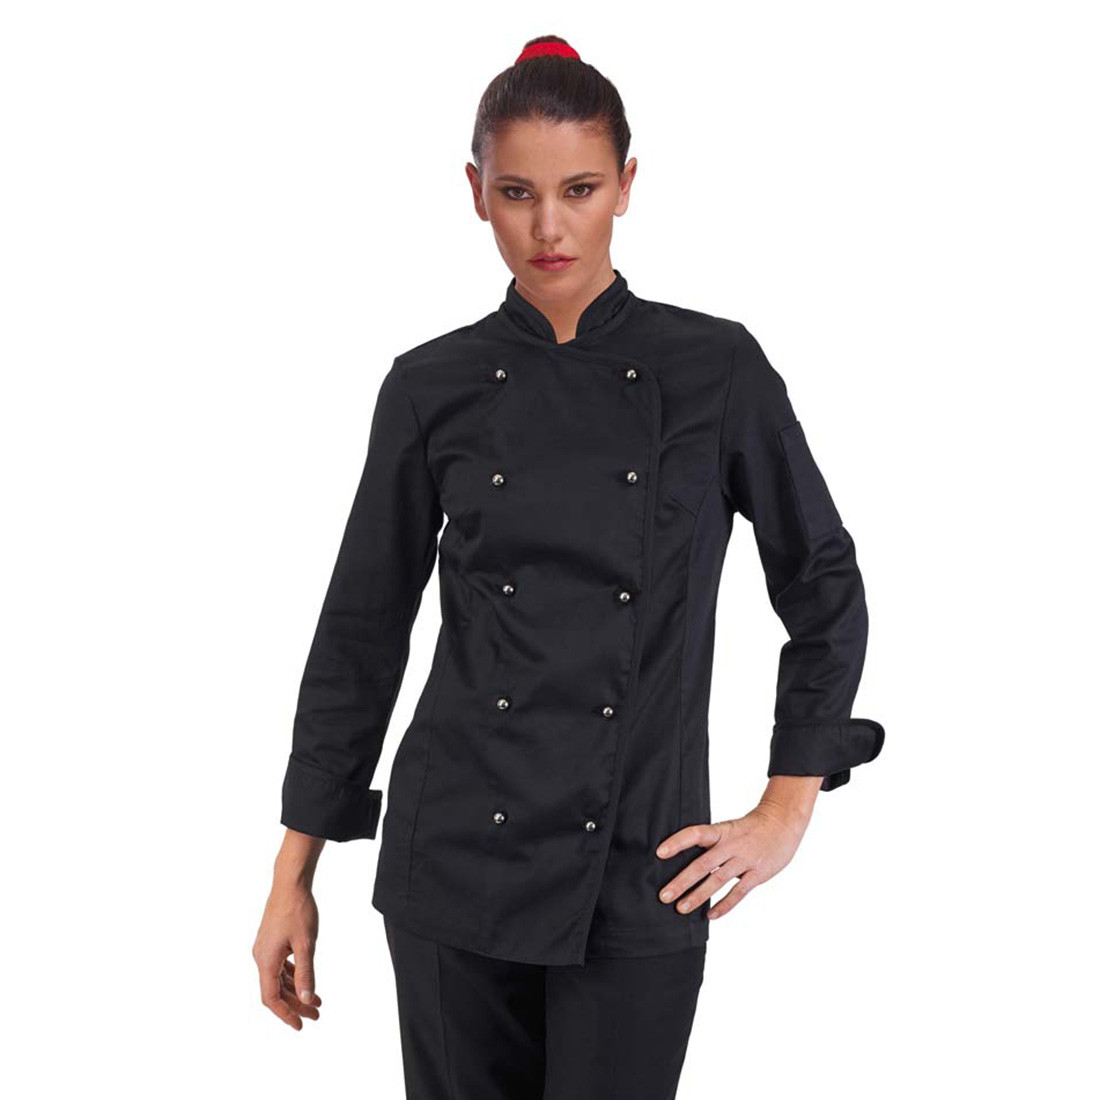 AMABEL Chef's Jacket - Safetywear